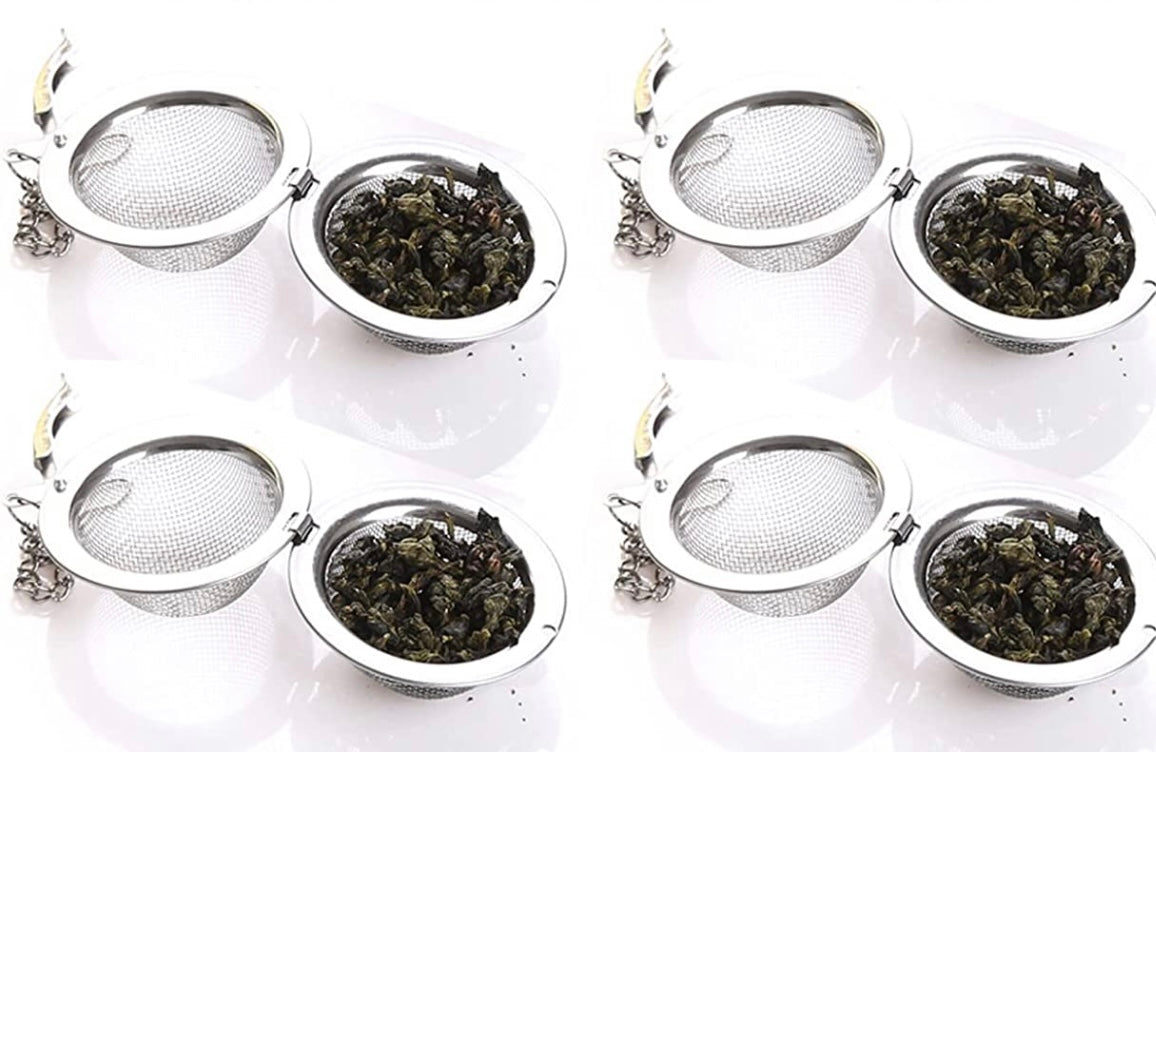 Premium Tea Ball/Infuser for Loose Herbs